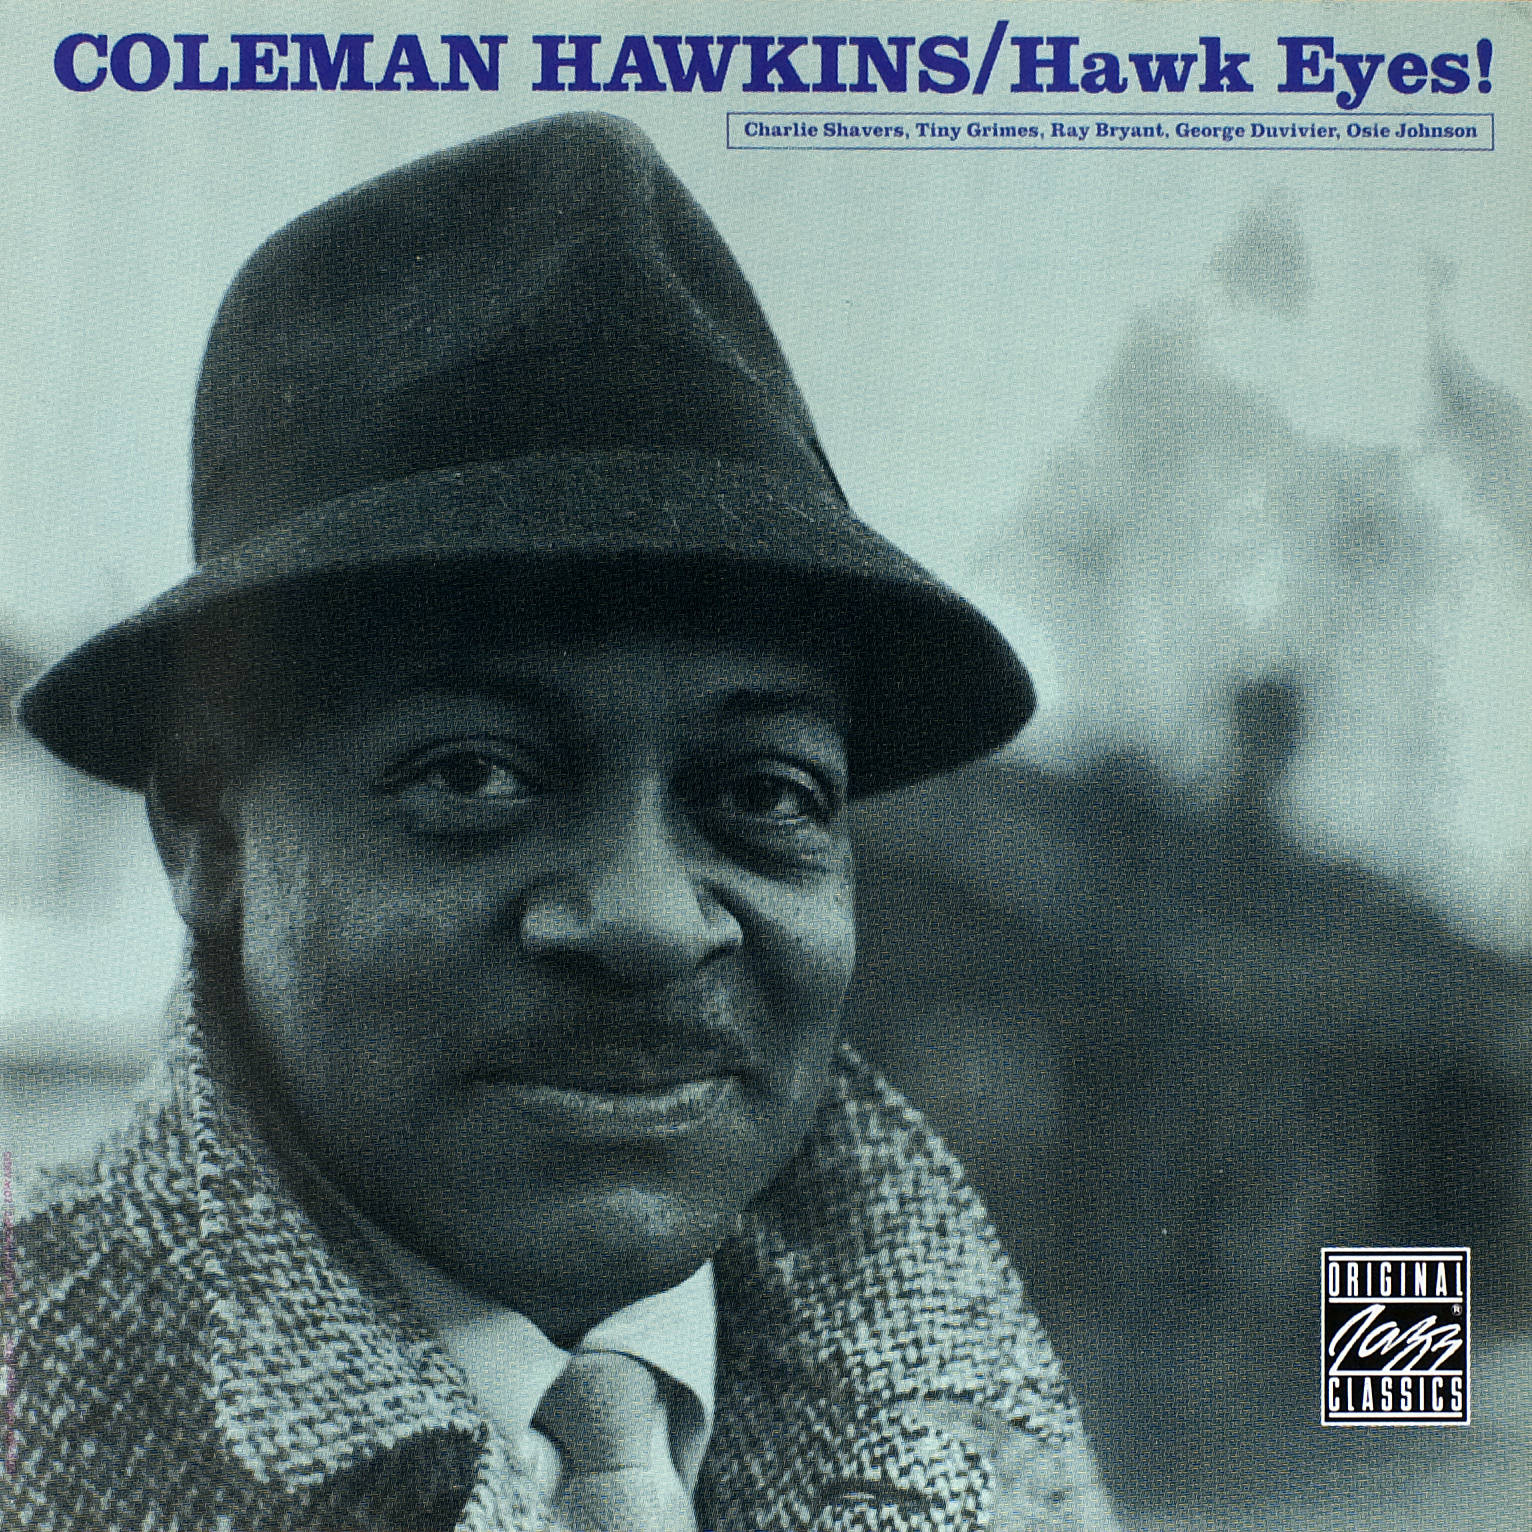 Coleman Hawkins Hawk Eyes Album Cover Wallpaper